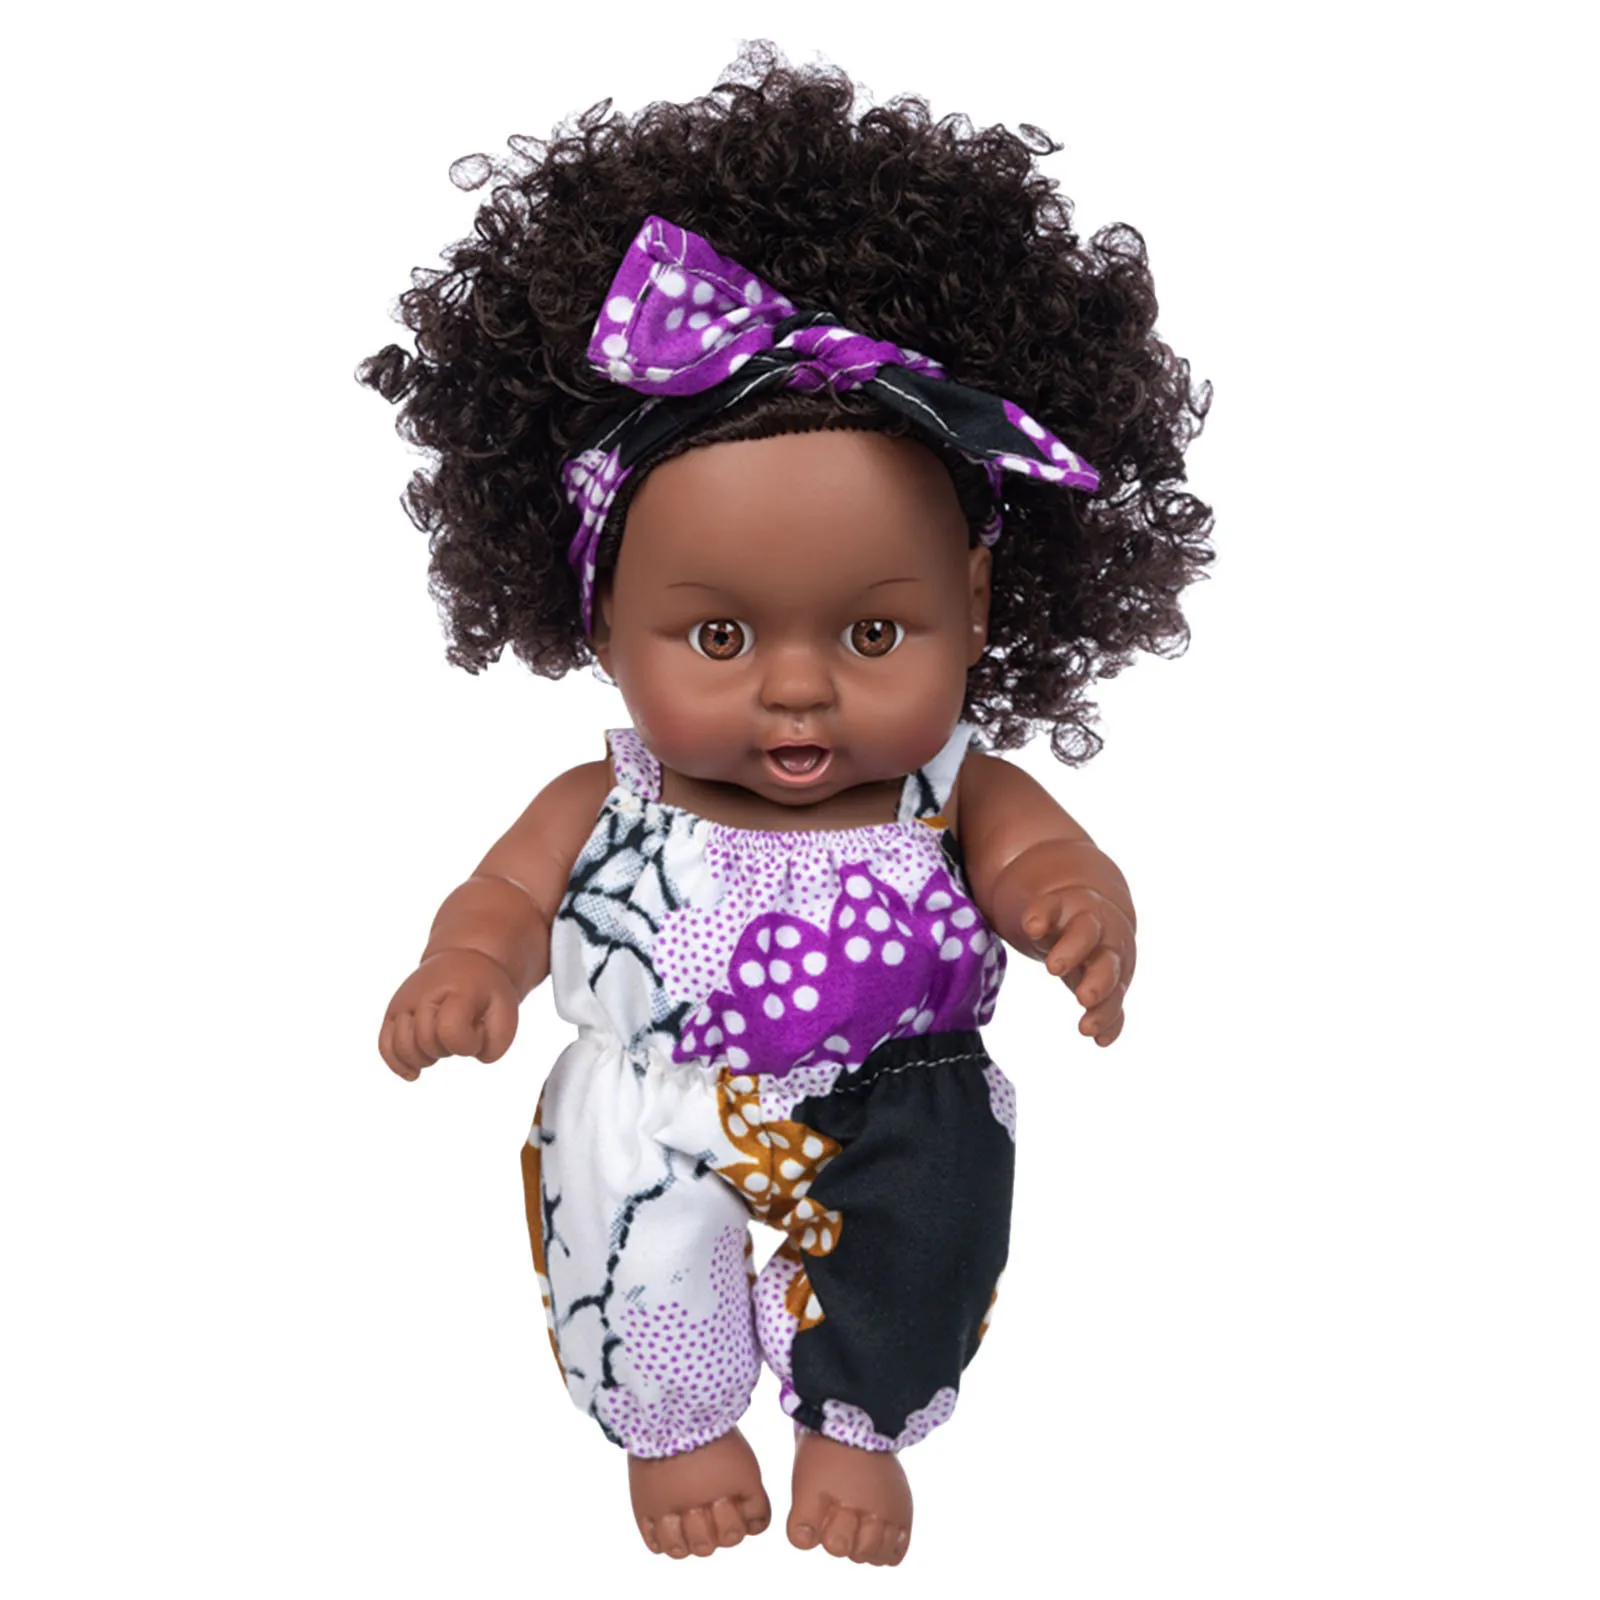 African Black Baby Toy Realistic Brown Eyes And Soft Black Skin Simulation Cartoon Doll Cute Mini Boy Girl Child Gift